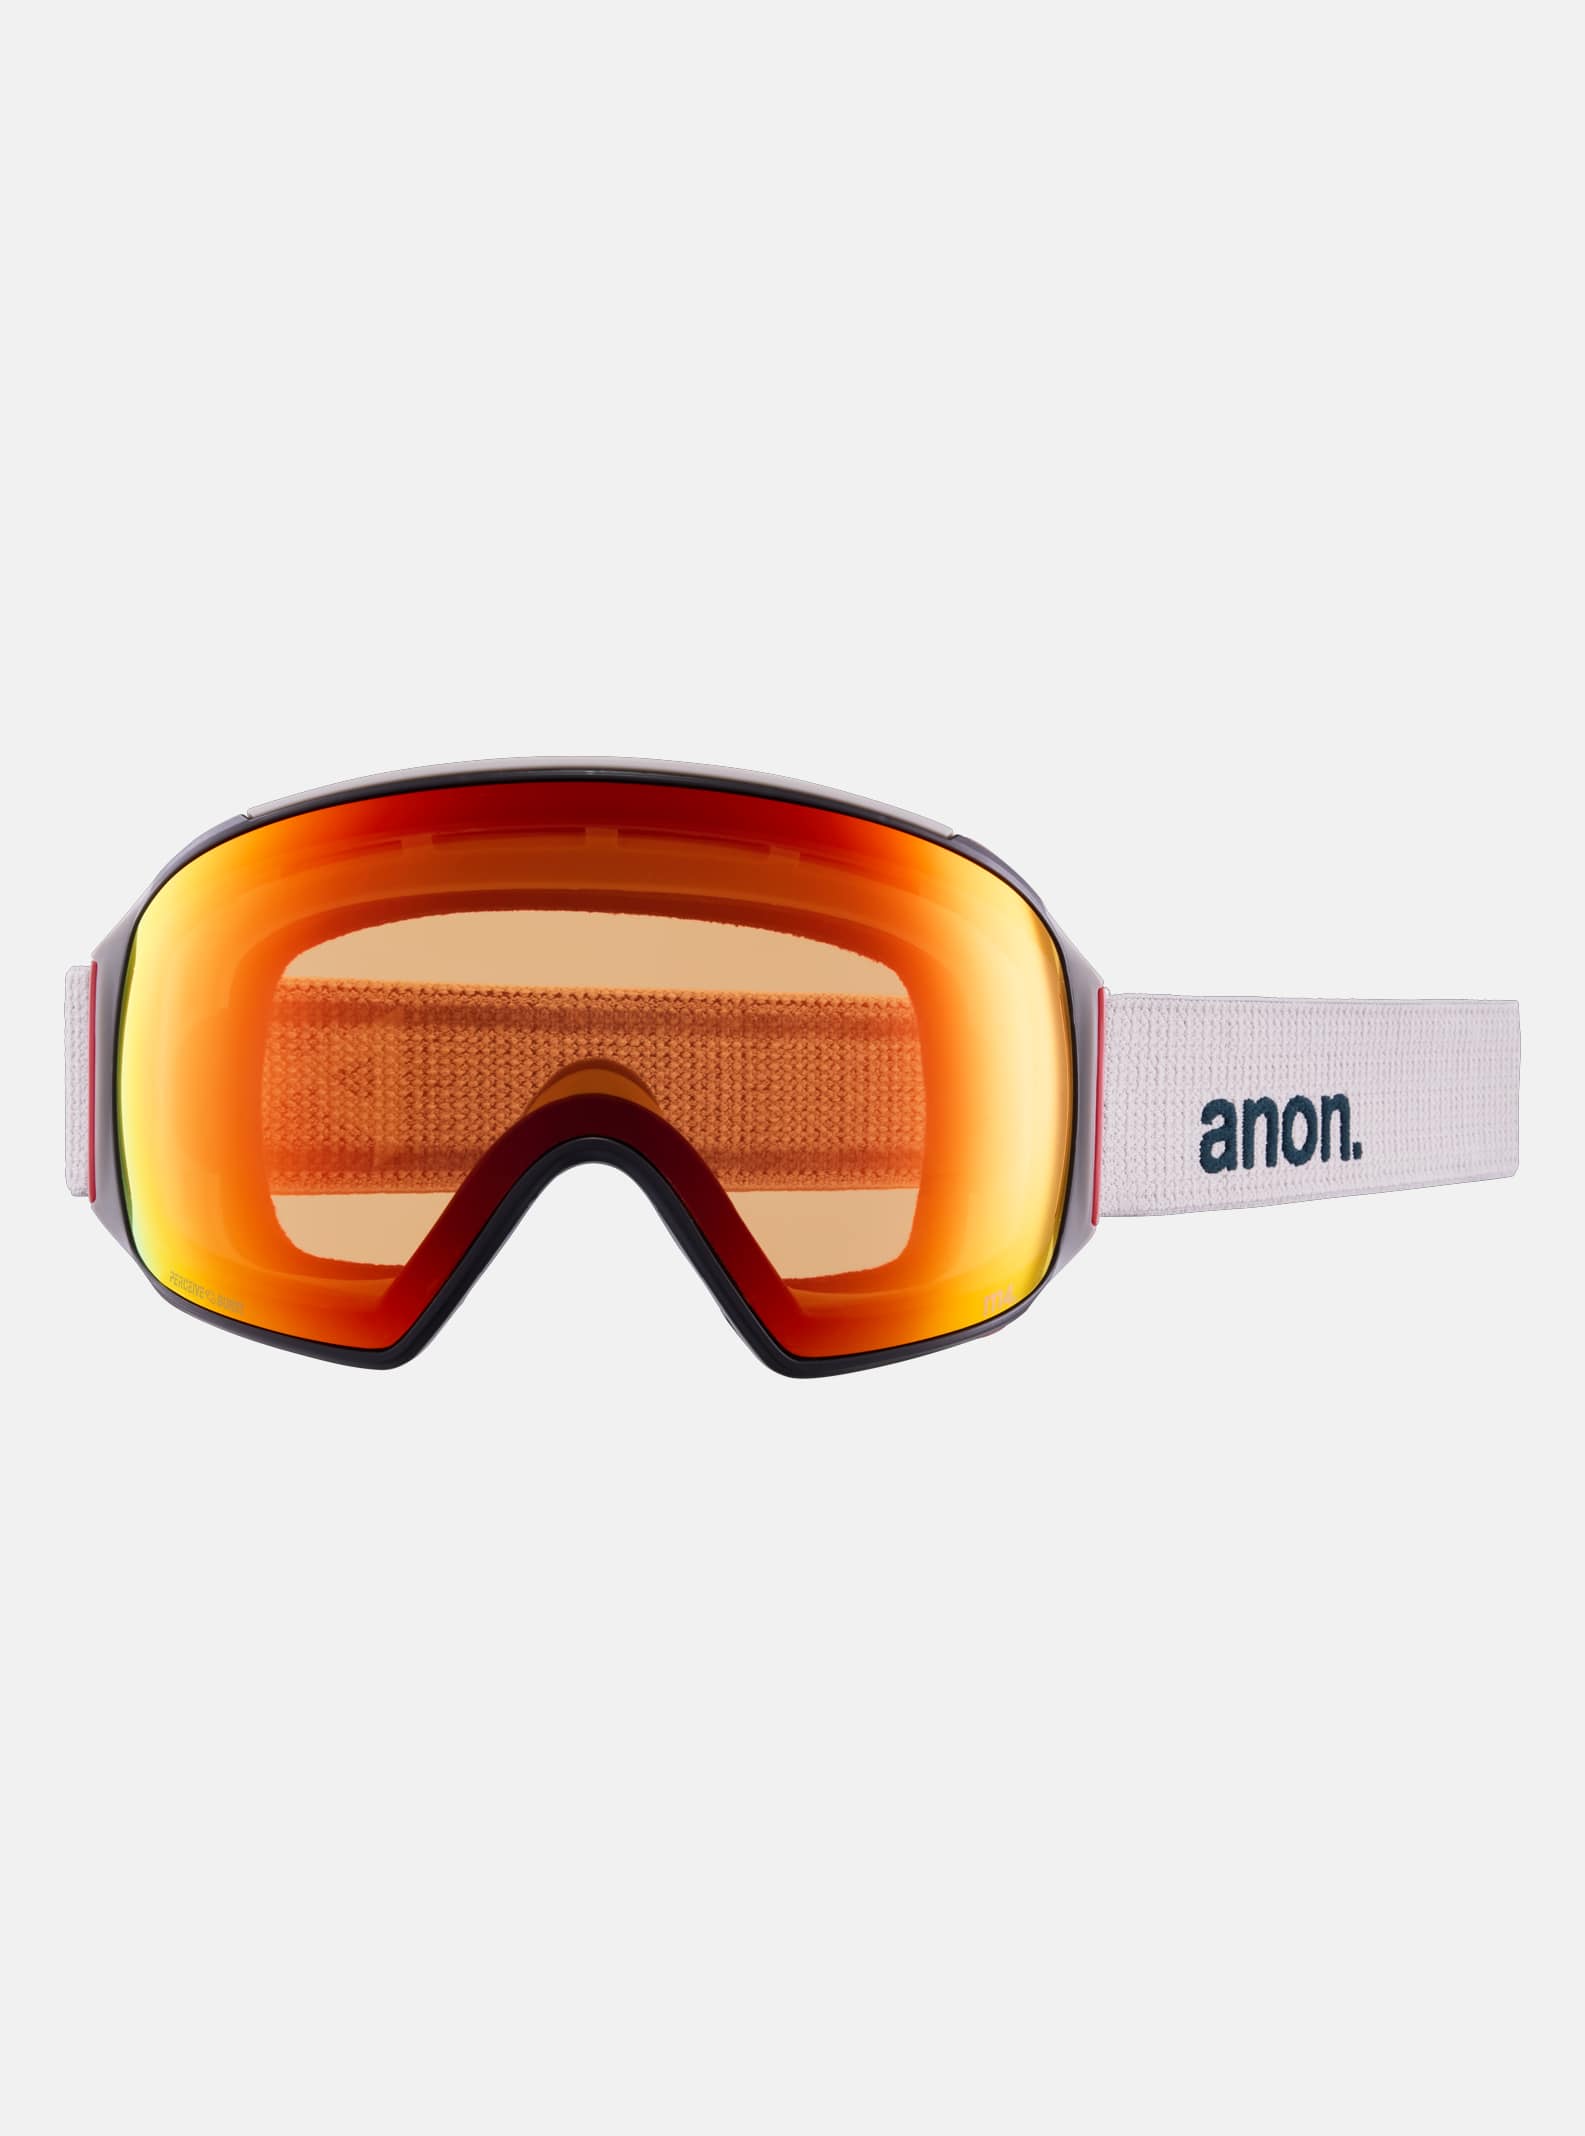 Anon M4 Goggles (Toric) + Bonus Lens + Face Mask | Anon Optics